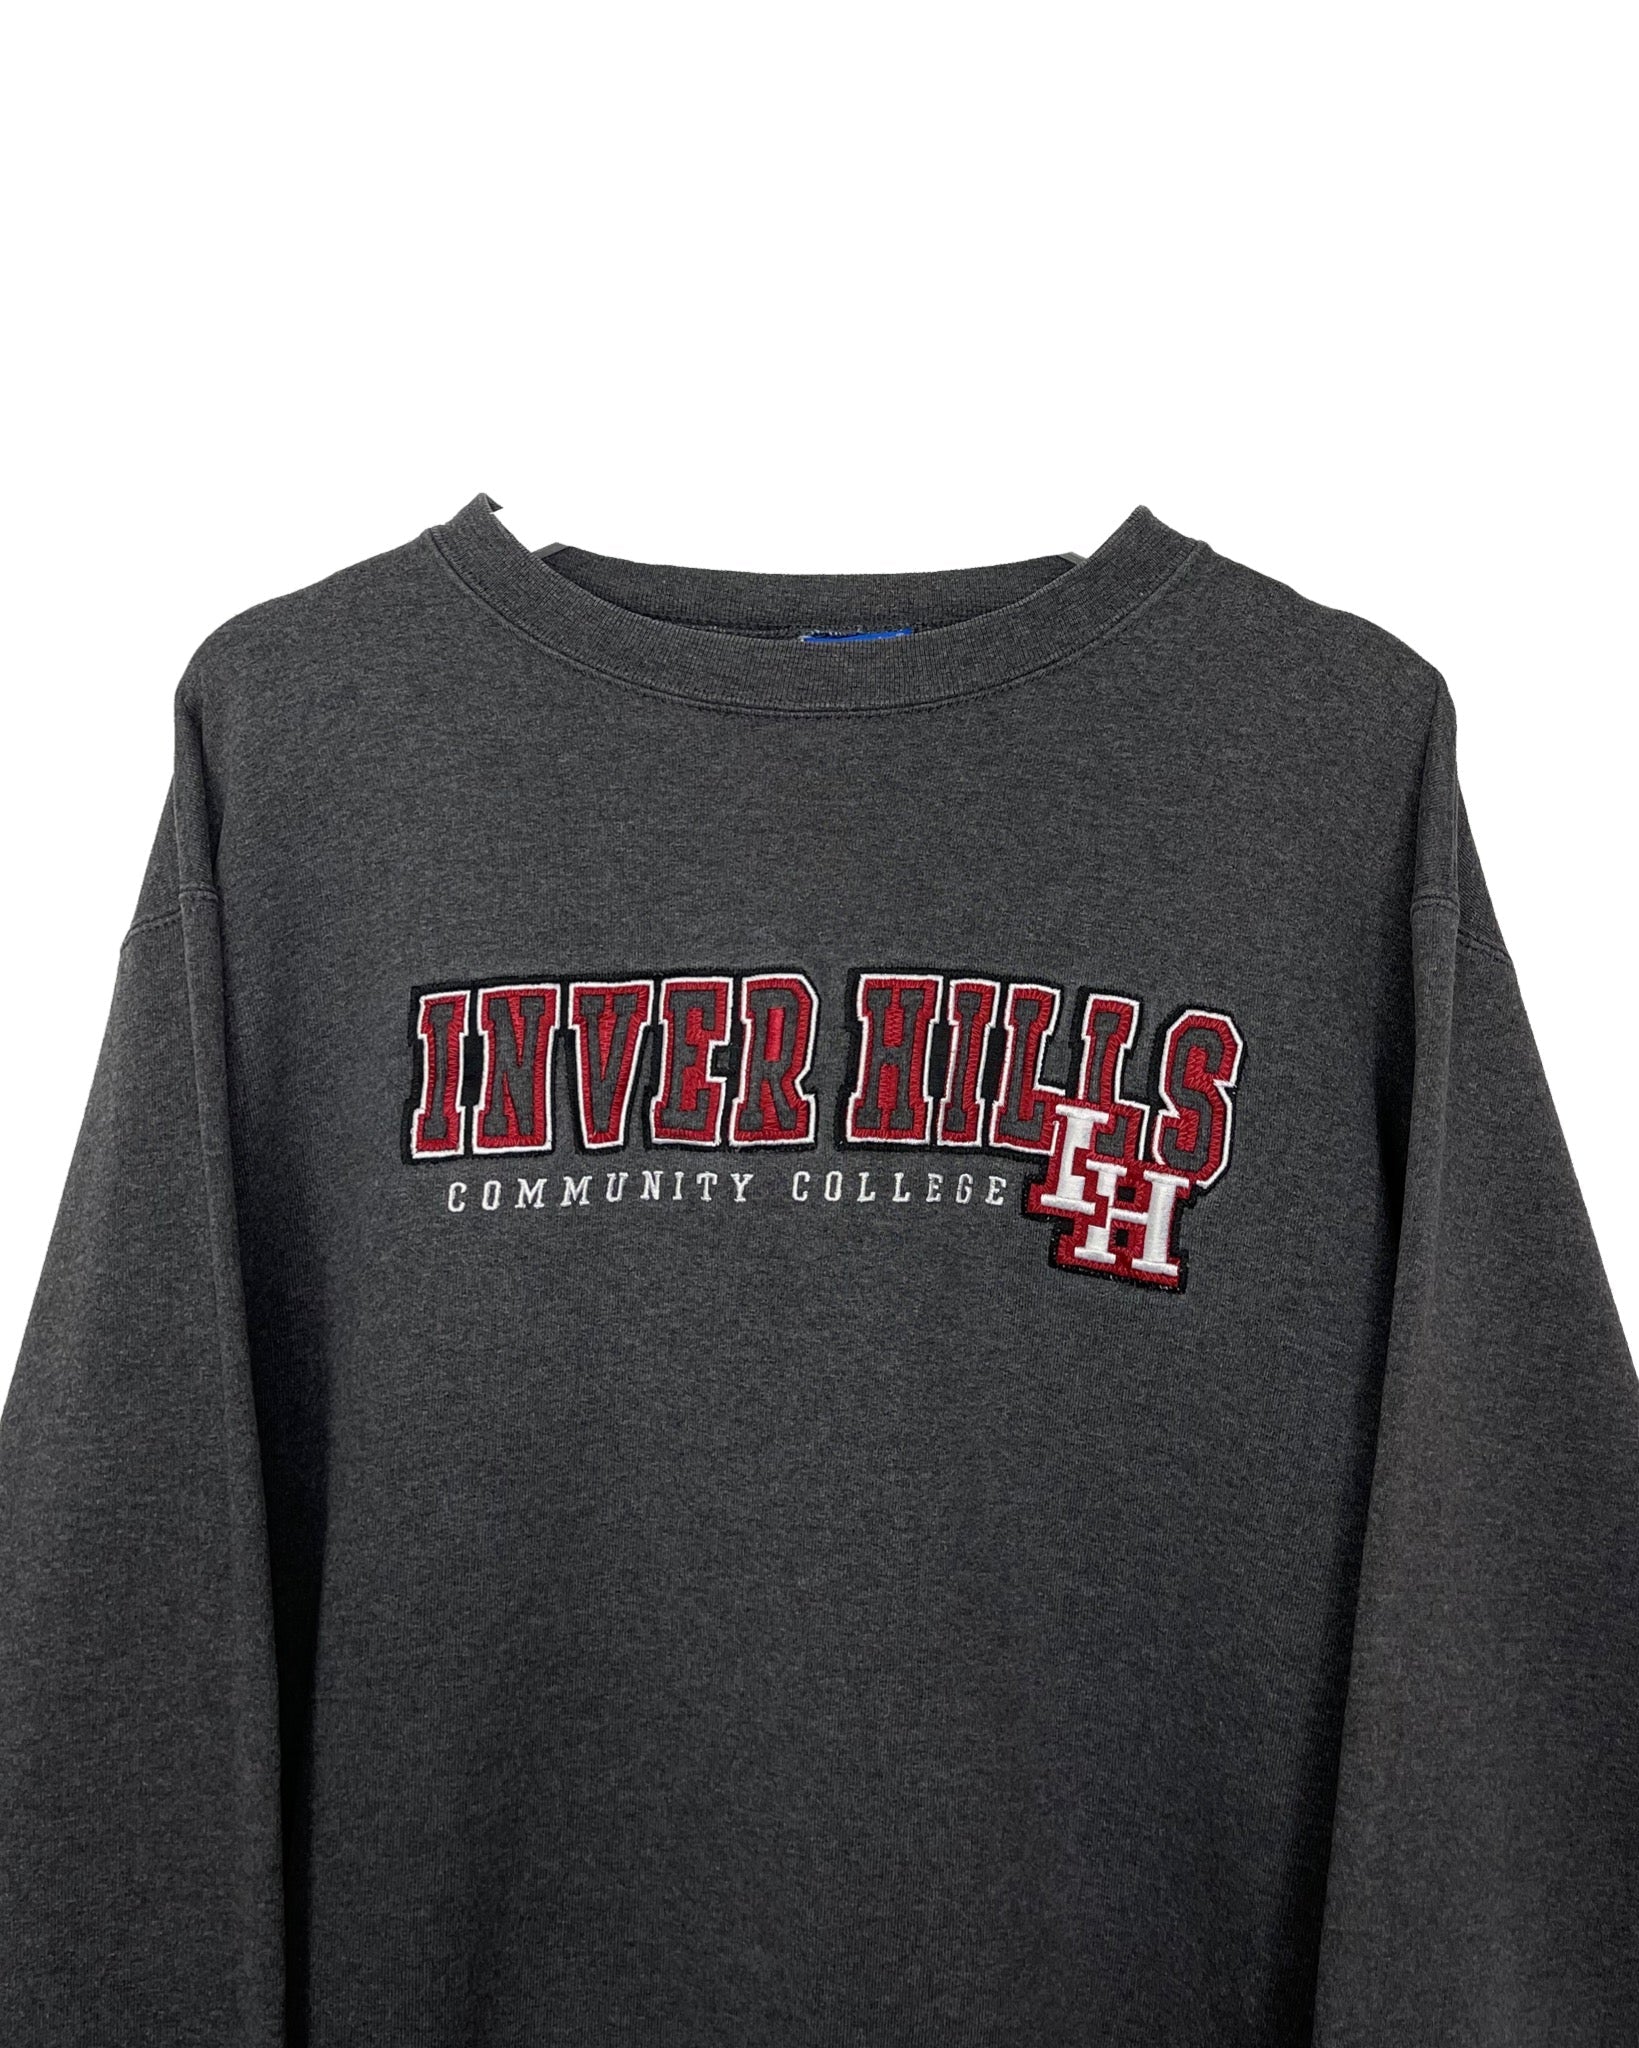  Sweatshirt Champion Sweat - Inver Hills College - M - PLOMOSTORE